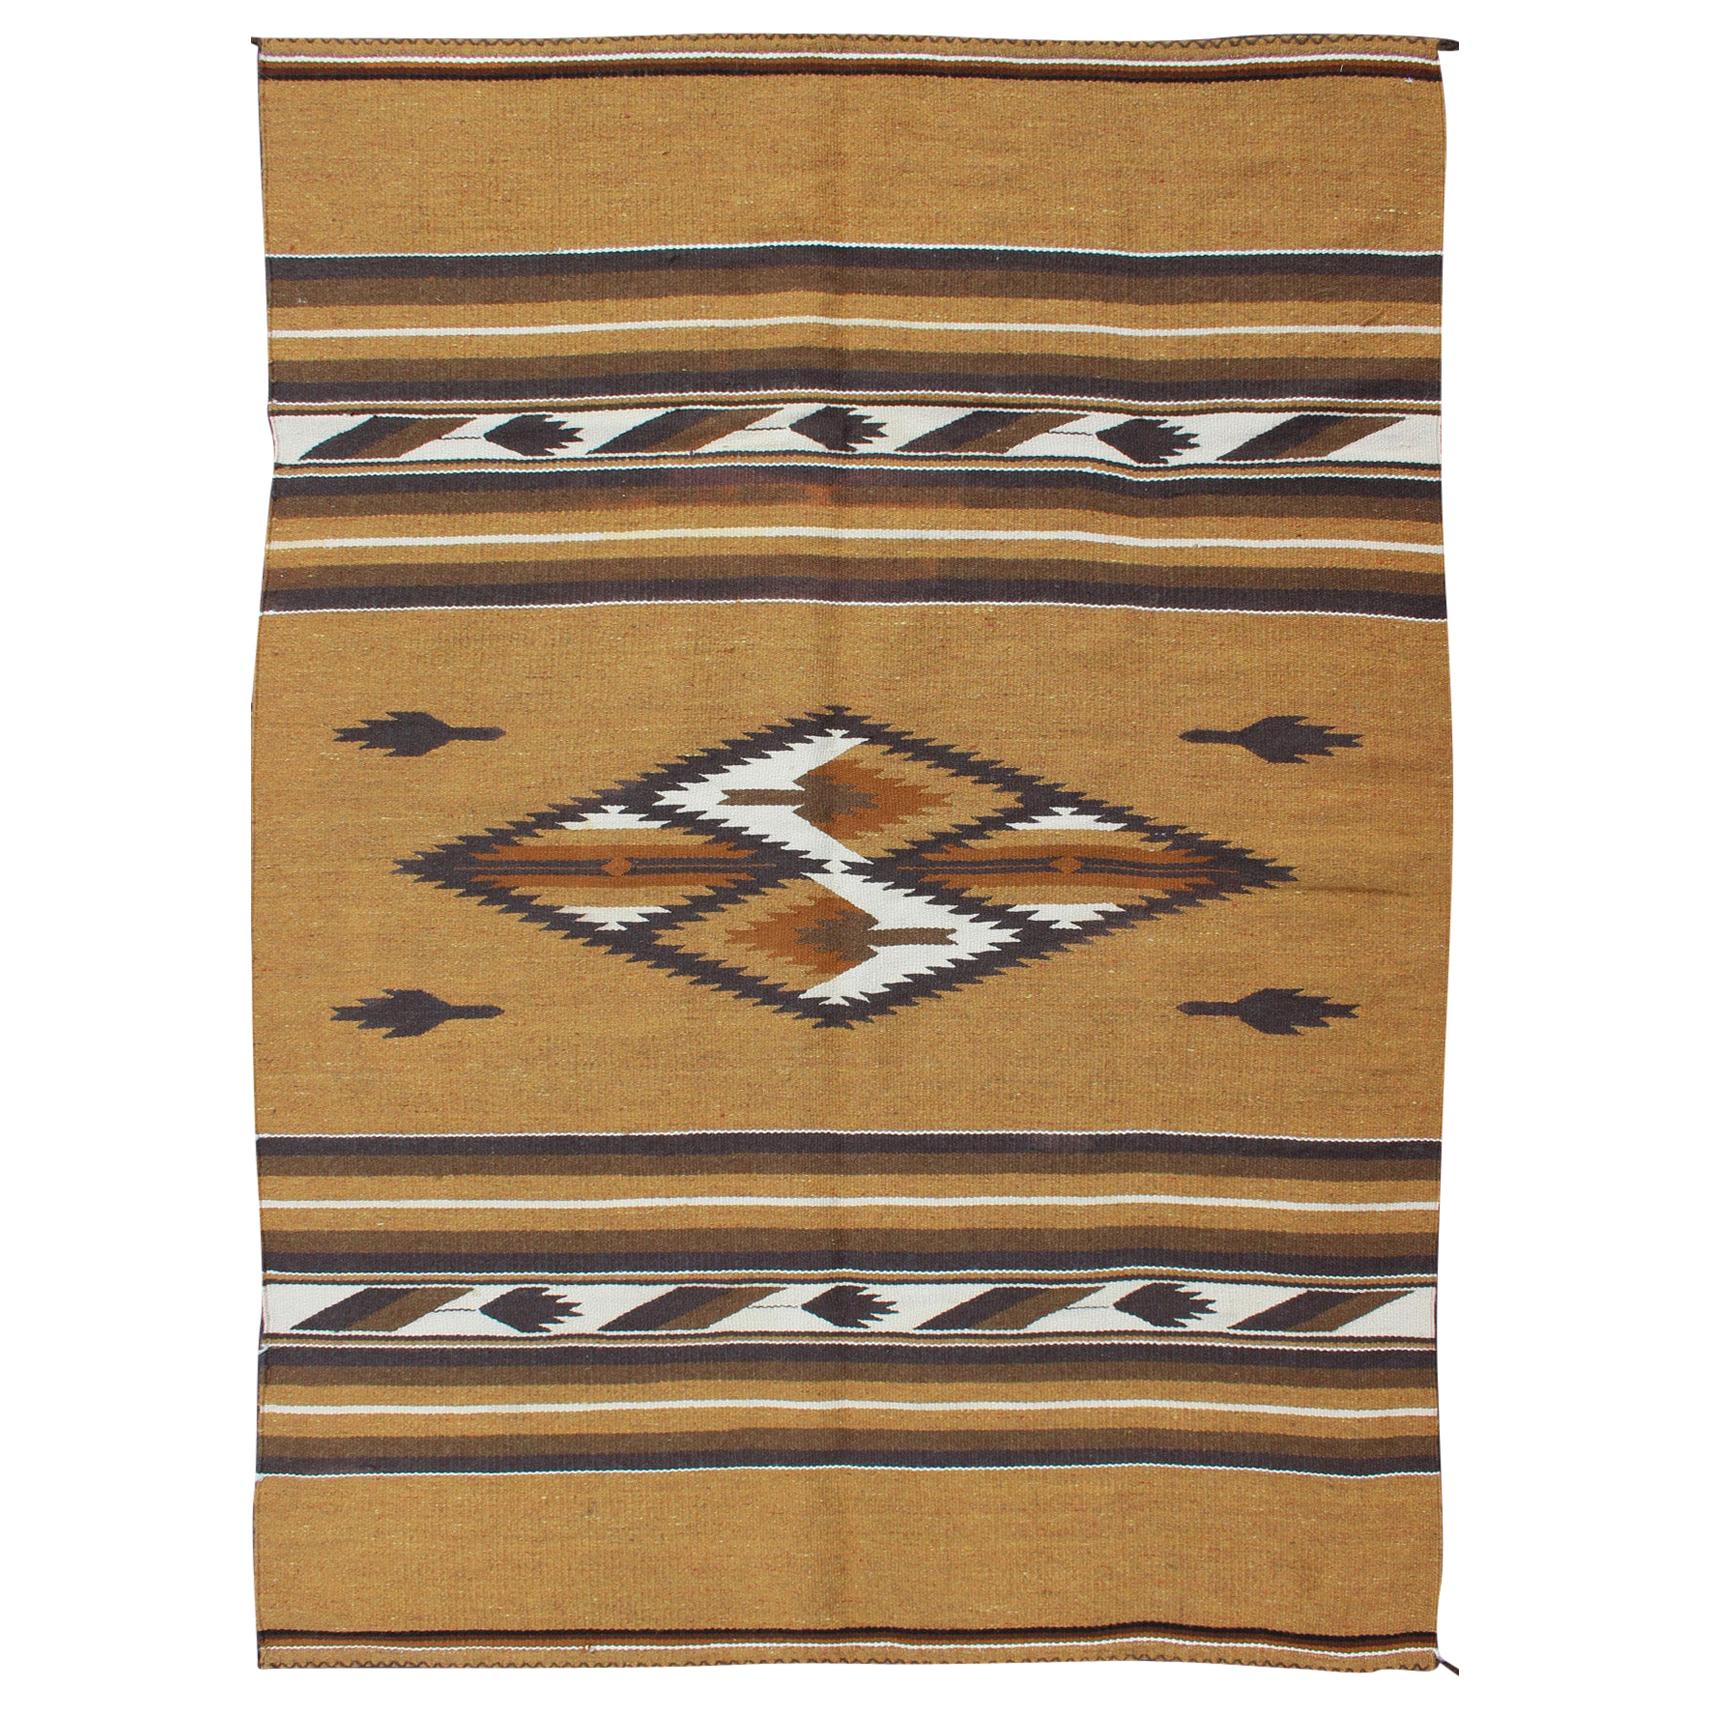 Vintage Navajo Kilim with Tribal Design in Earthy Tones